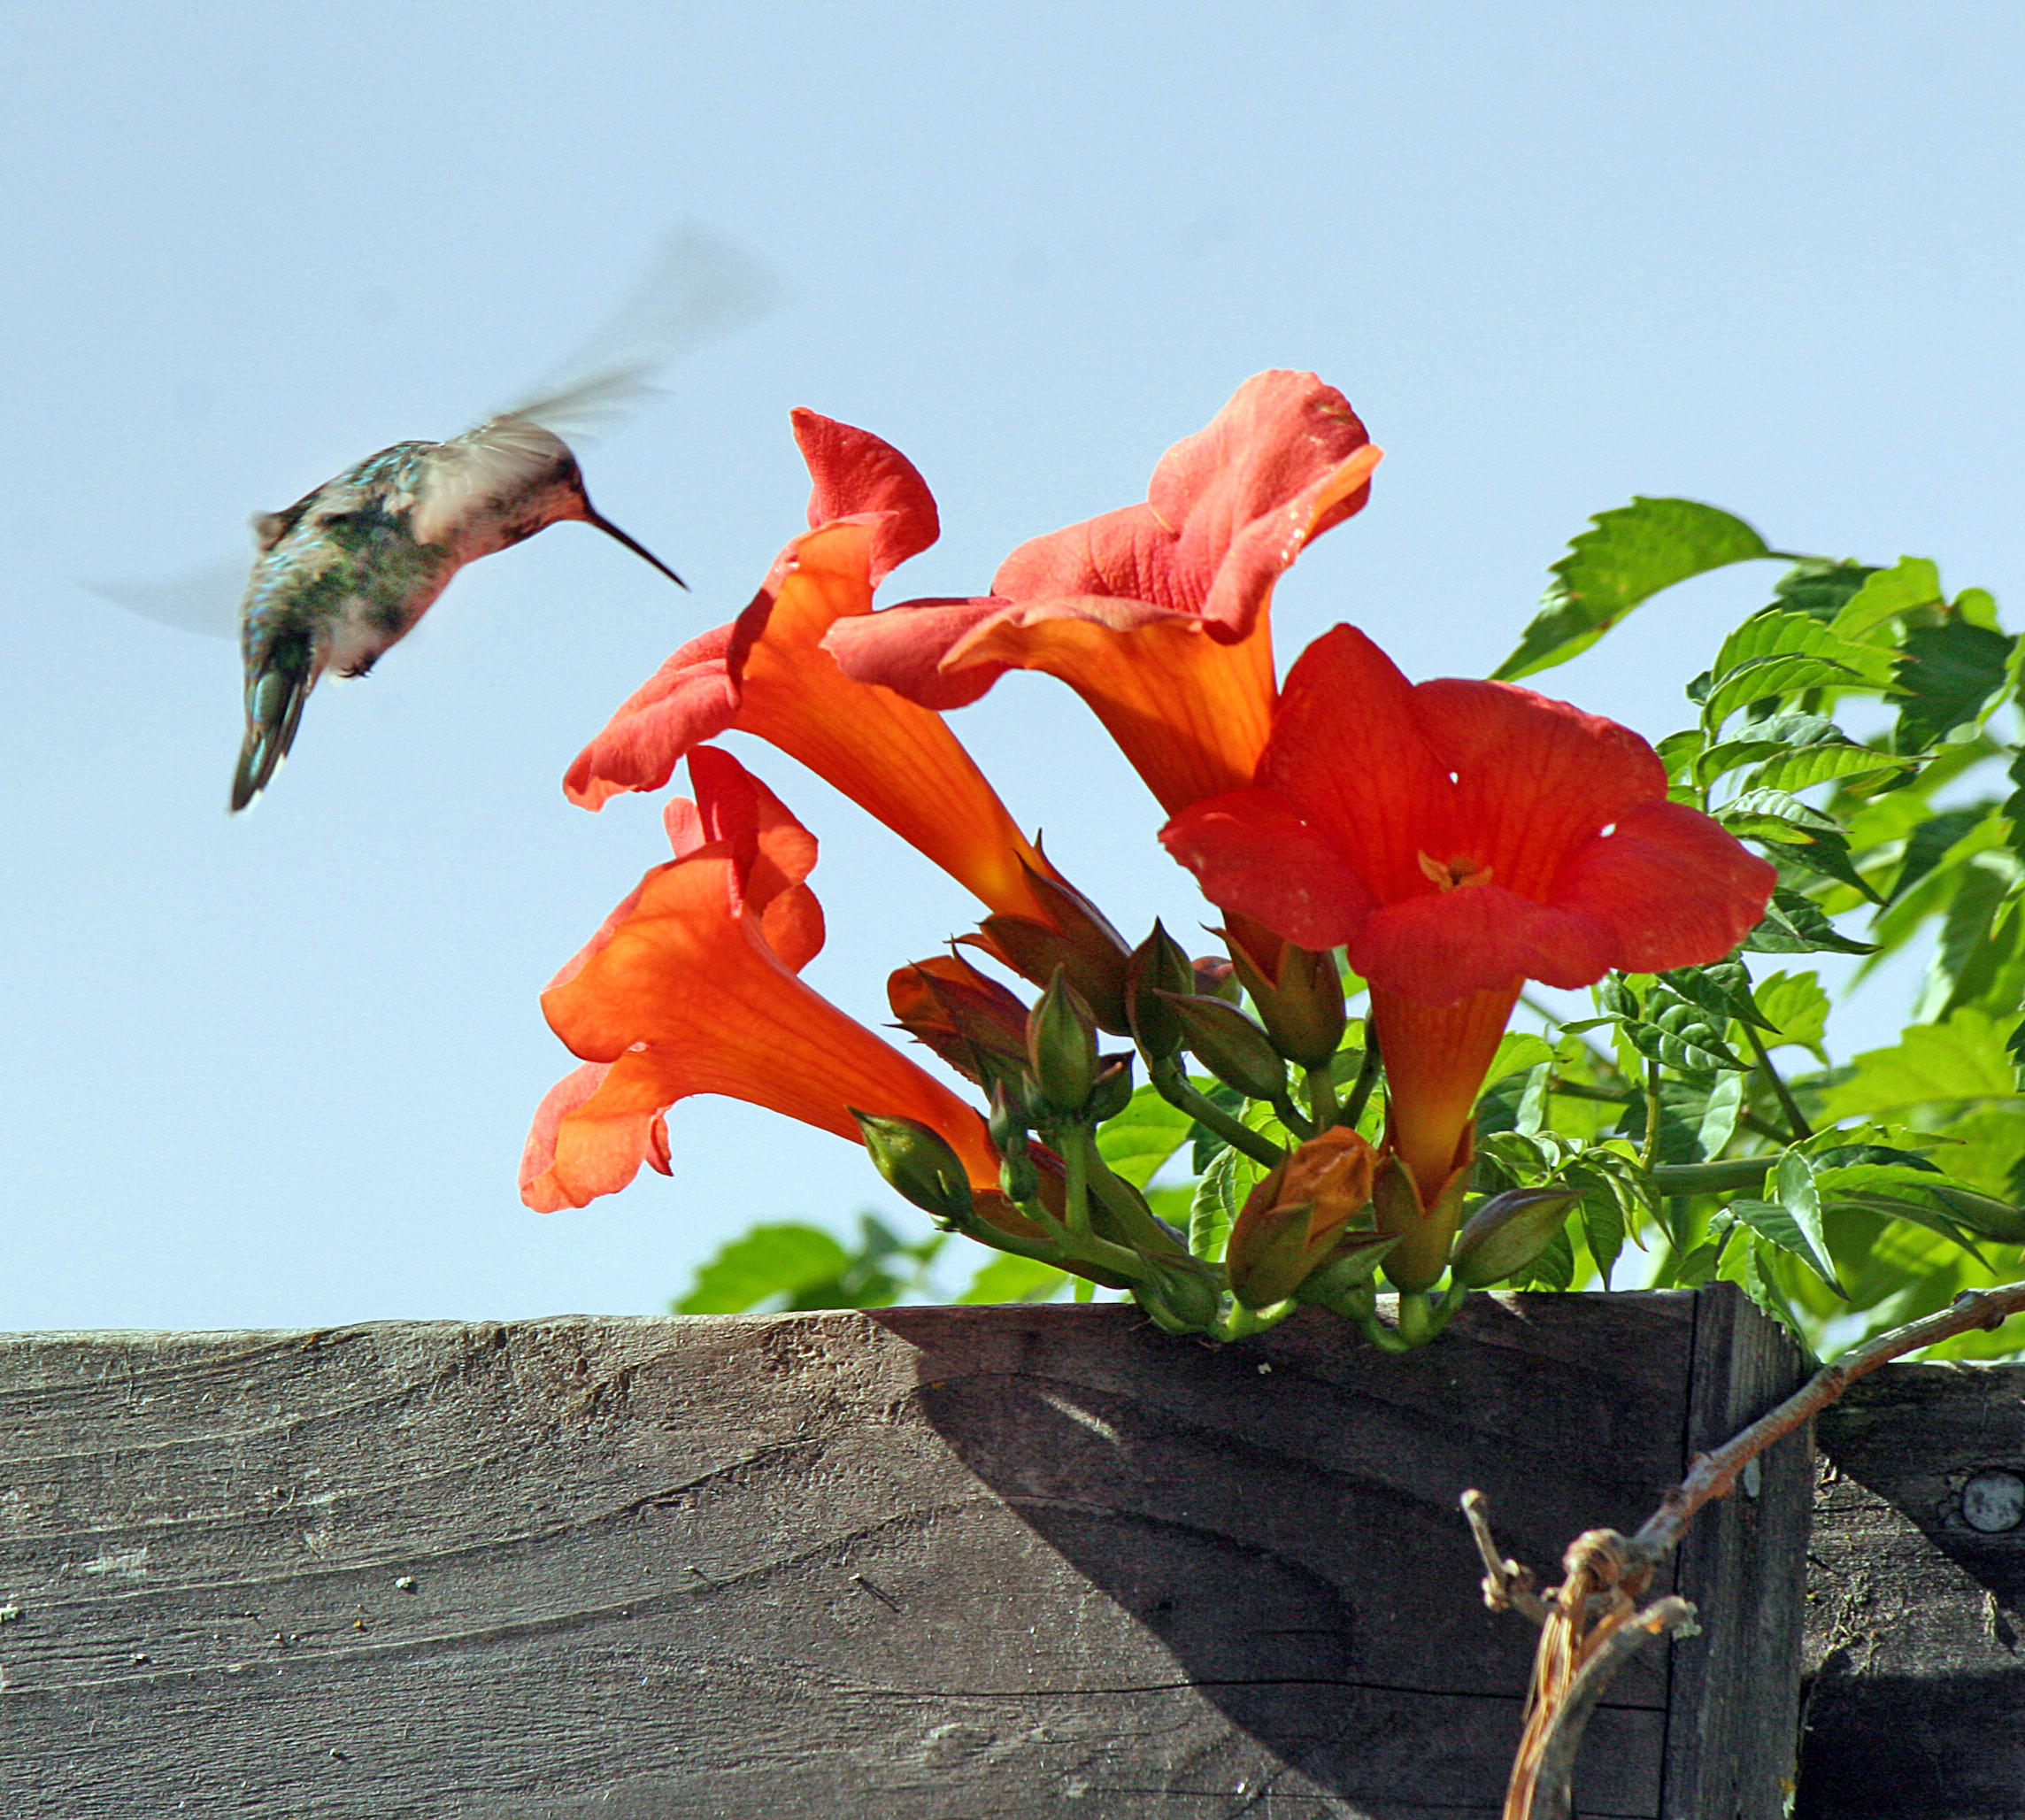 Hummingbird & trumpet flowers photo